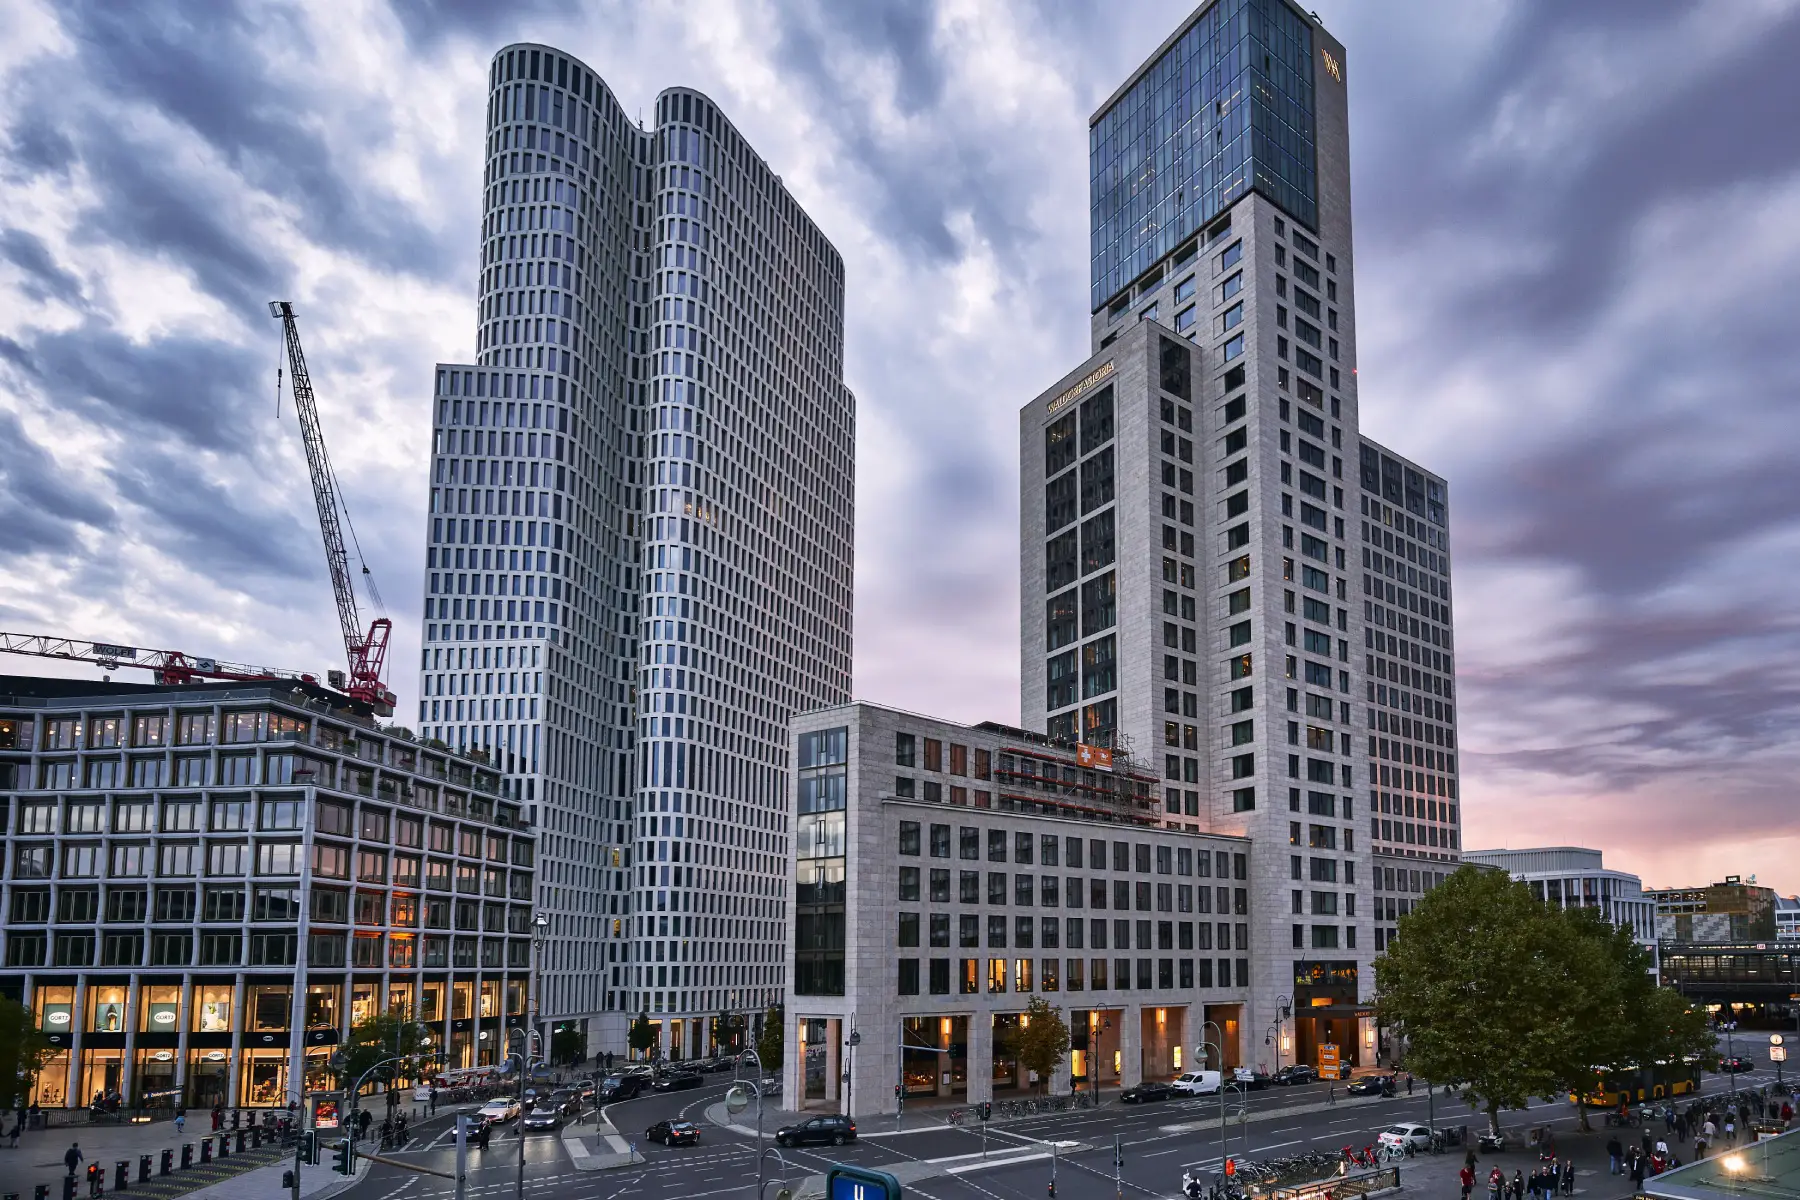 A landscape shot of high-rise office buildings in Kurfürstendamm business district in Berlin